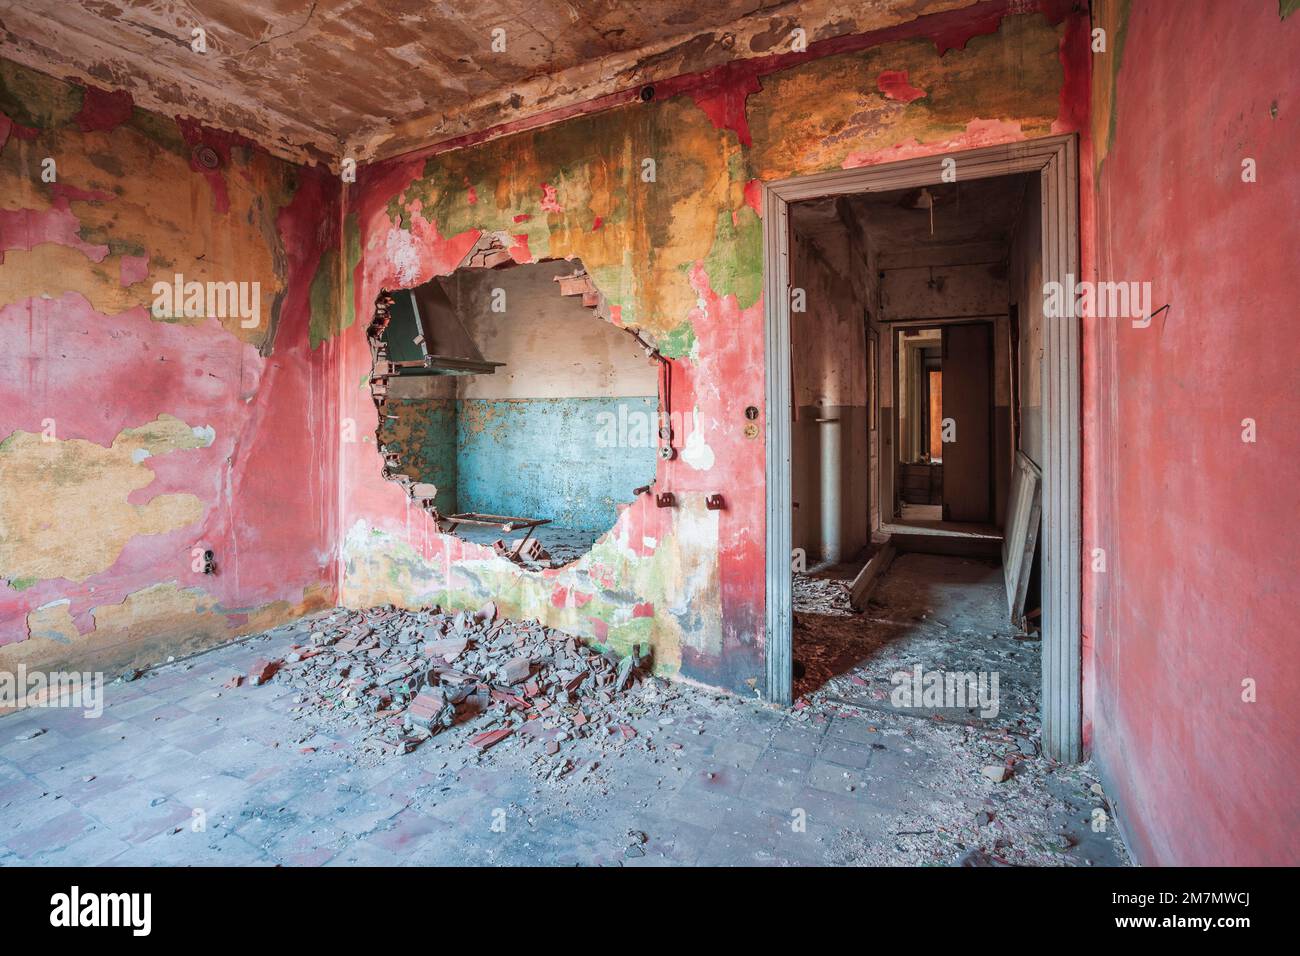 Italy, Veneto, interior of an abandoned house with vivid colors walls Stock Photo